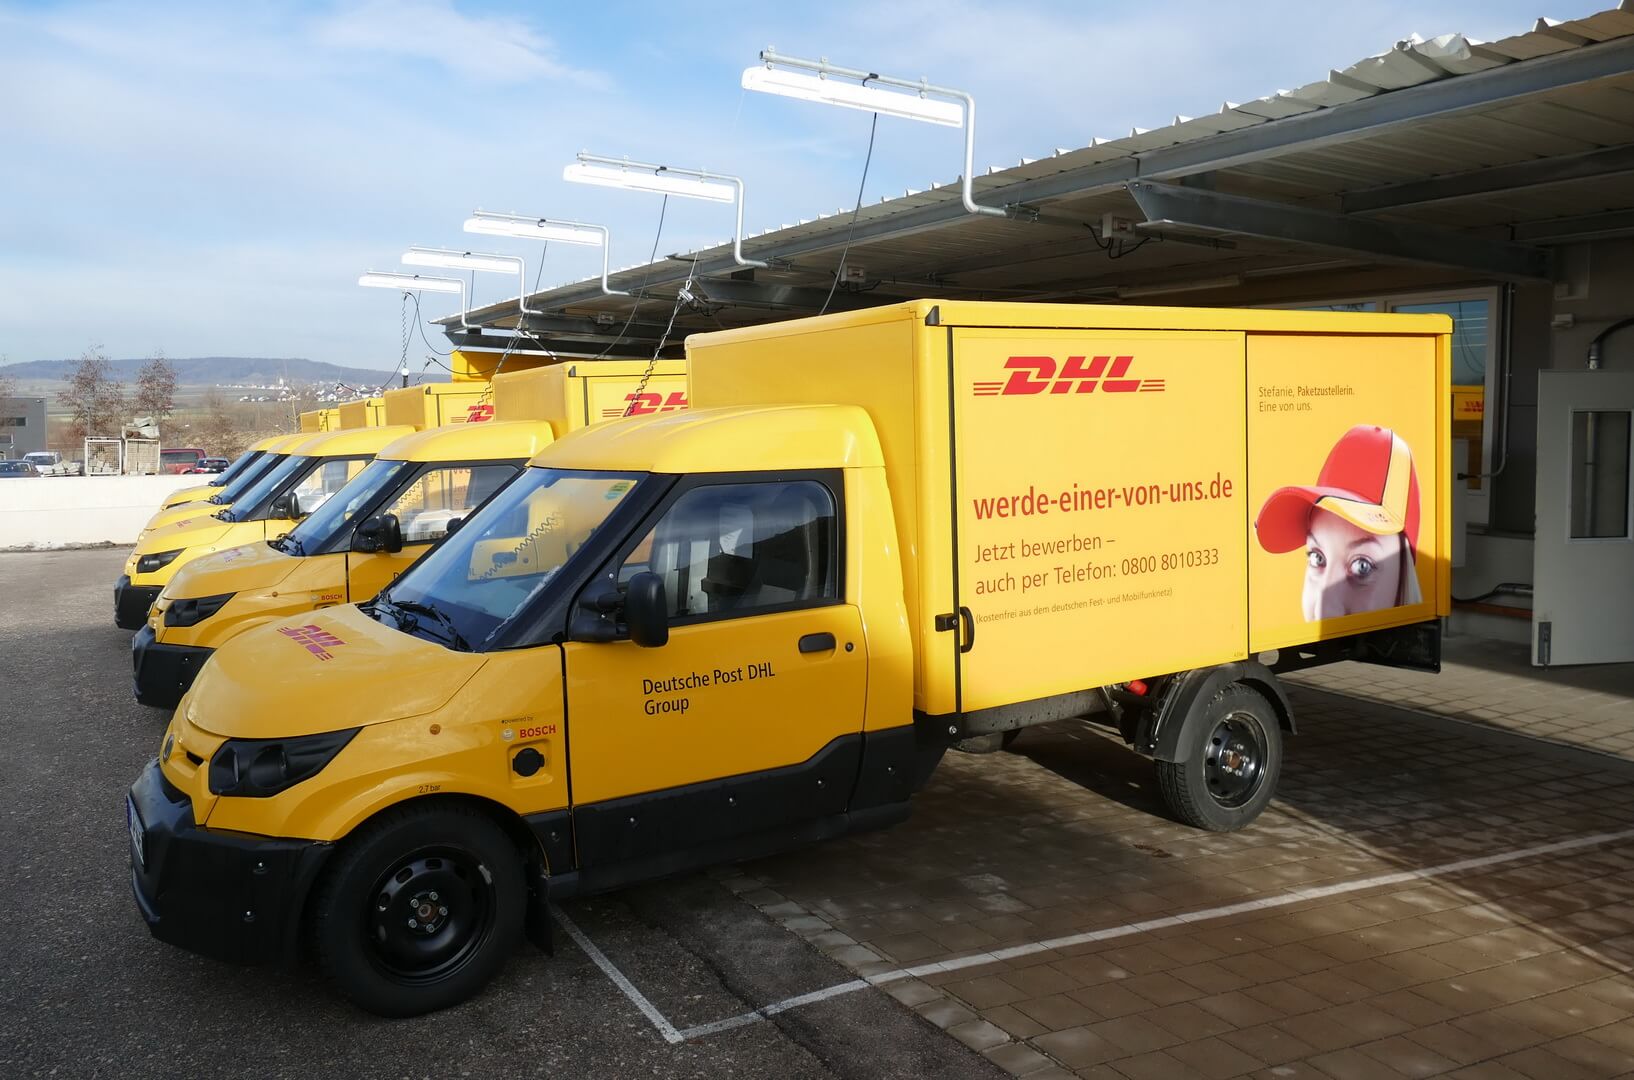 DHL уже эксплуатирует электрические фургоны StreetScooter